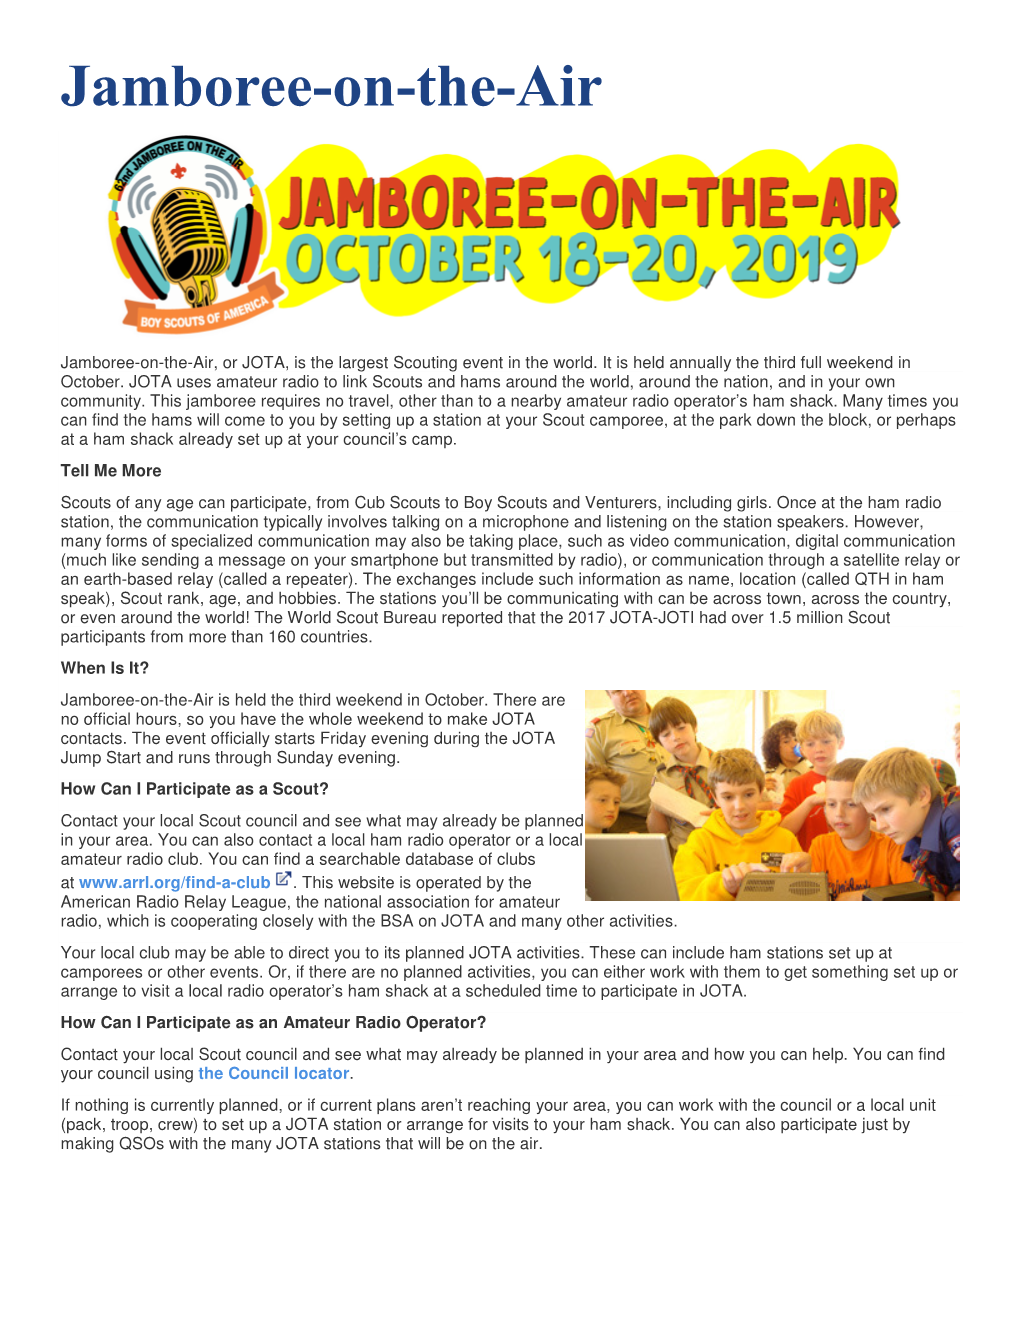 Jamboree-On-The-Air